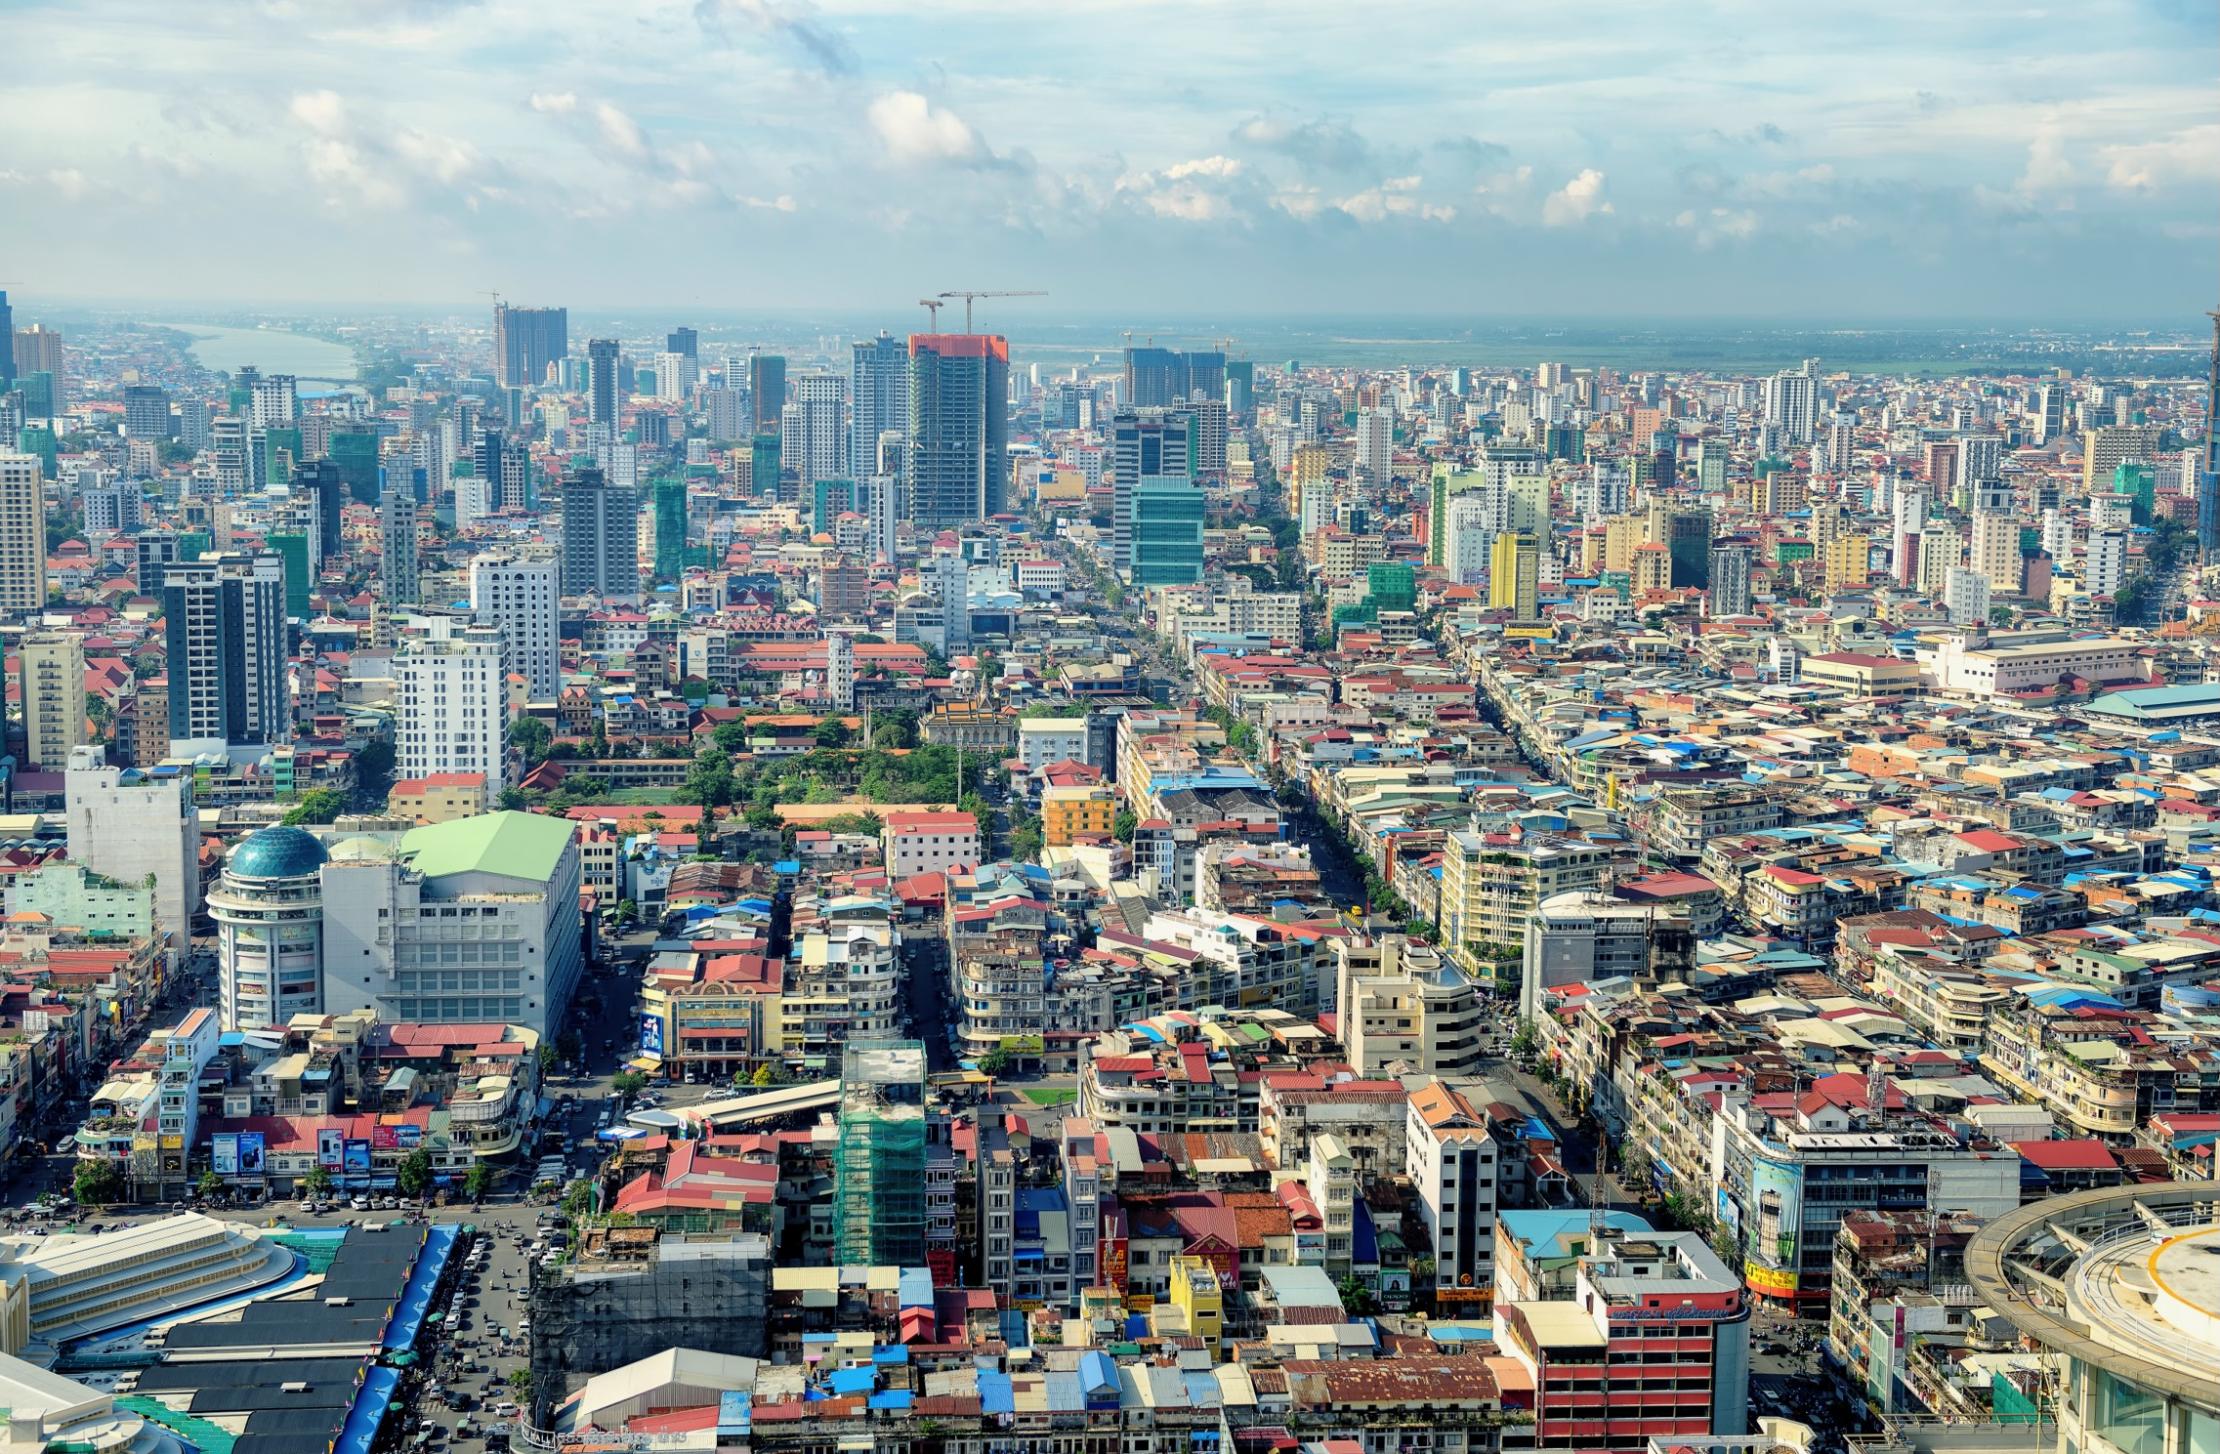 Aerial view of Phnom Penh city